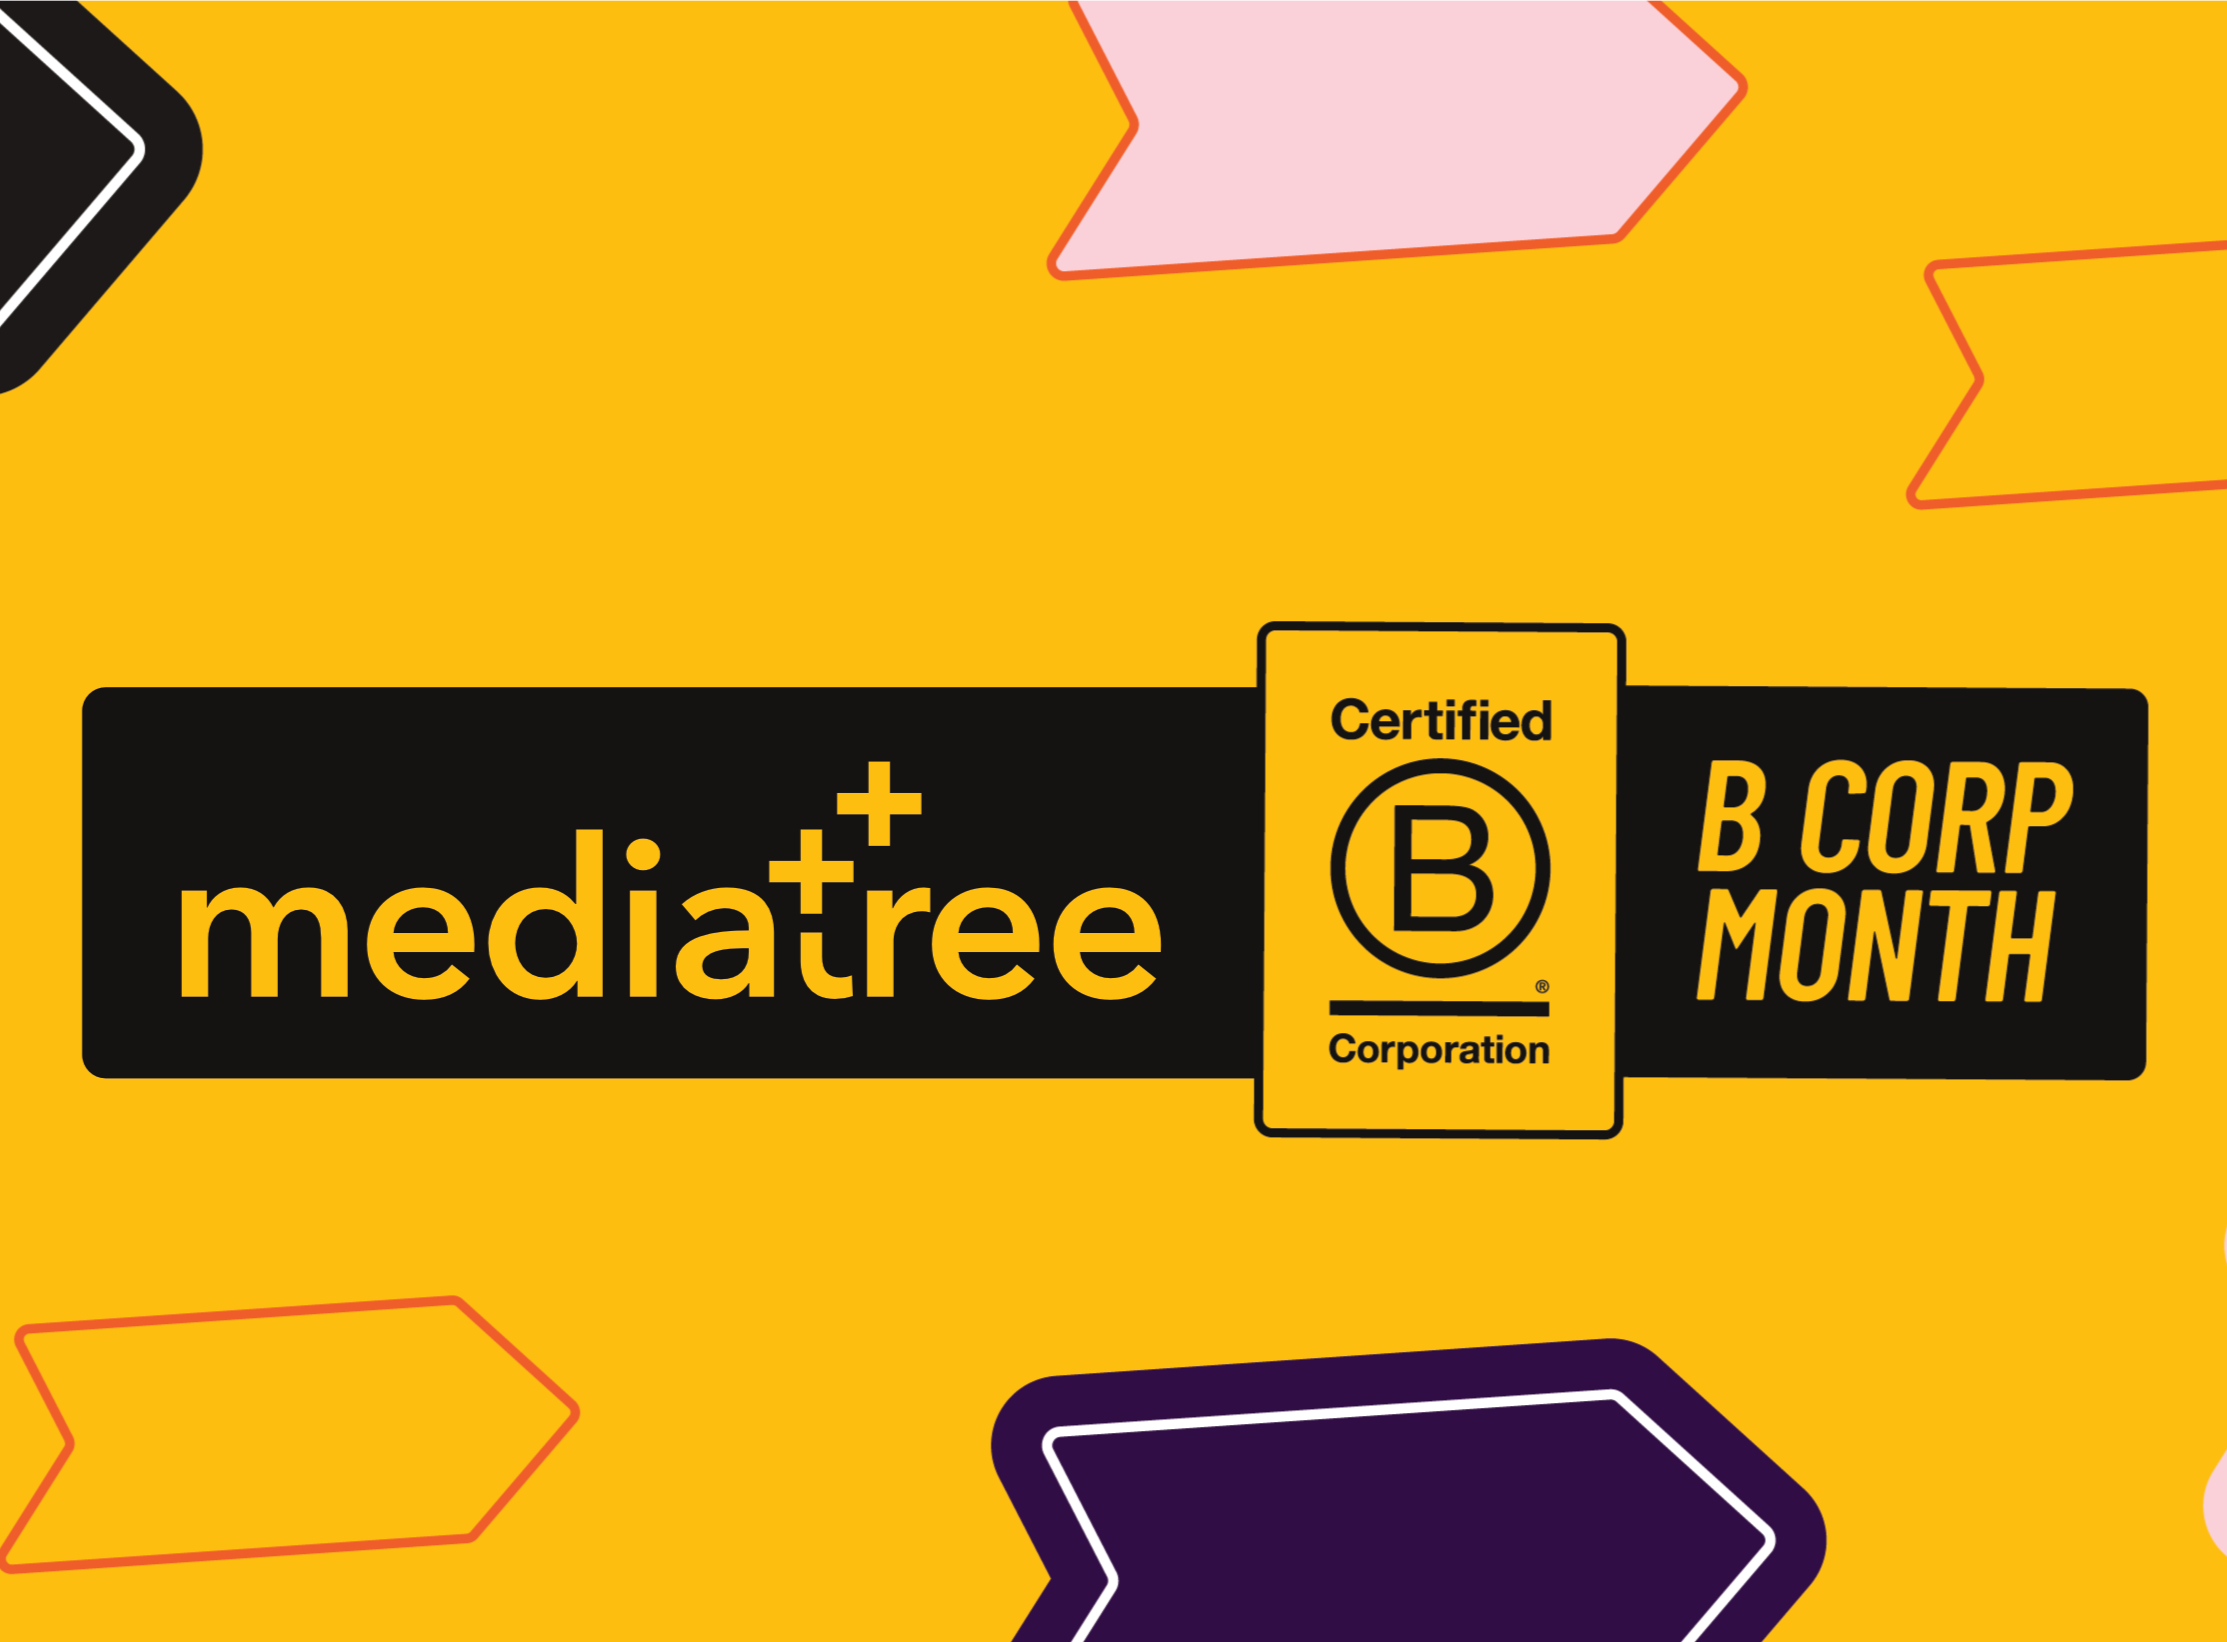 Mediatree’s B Corp Month Round Up